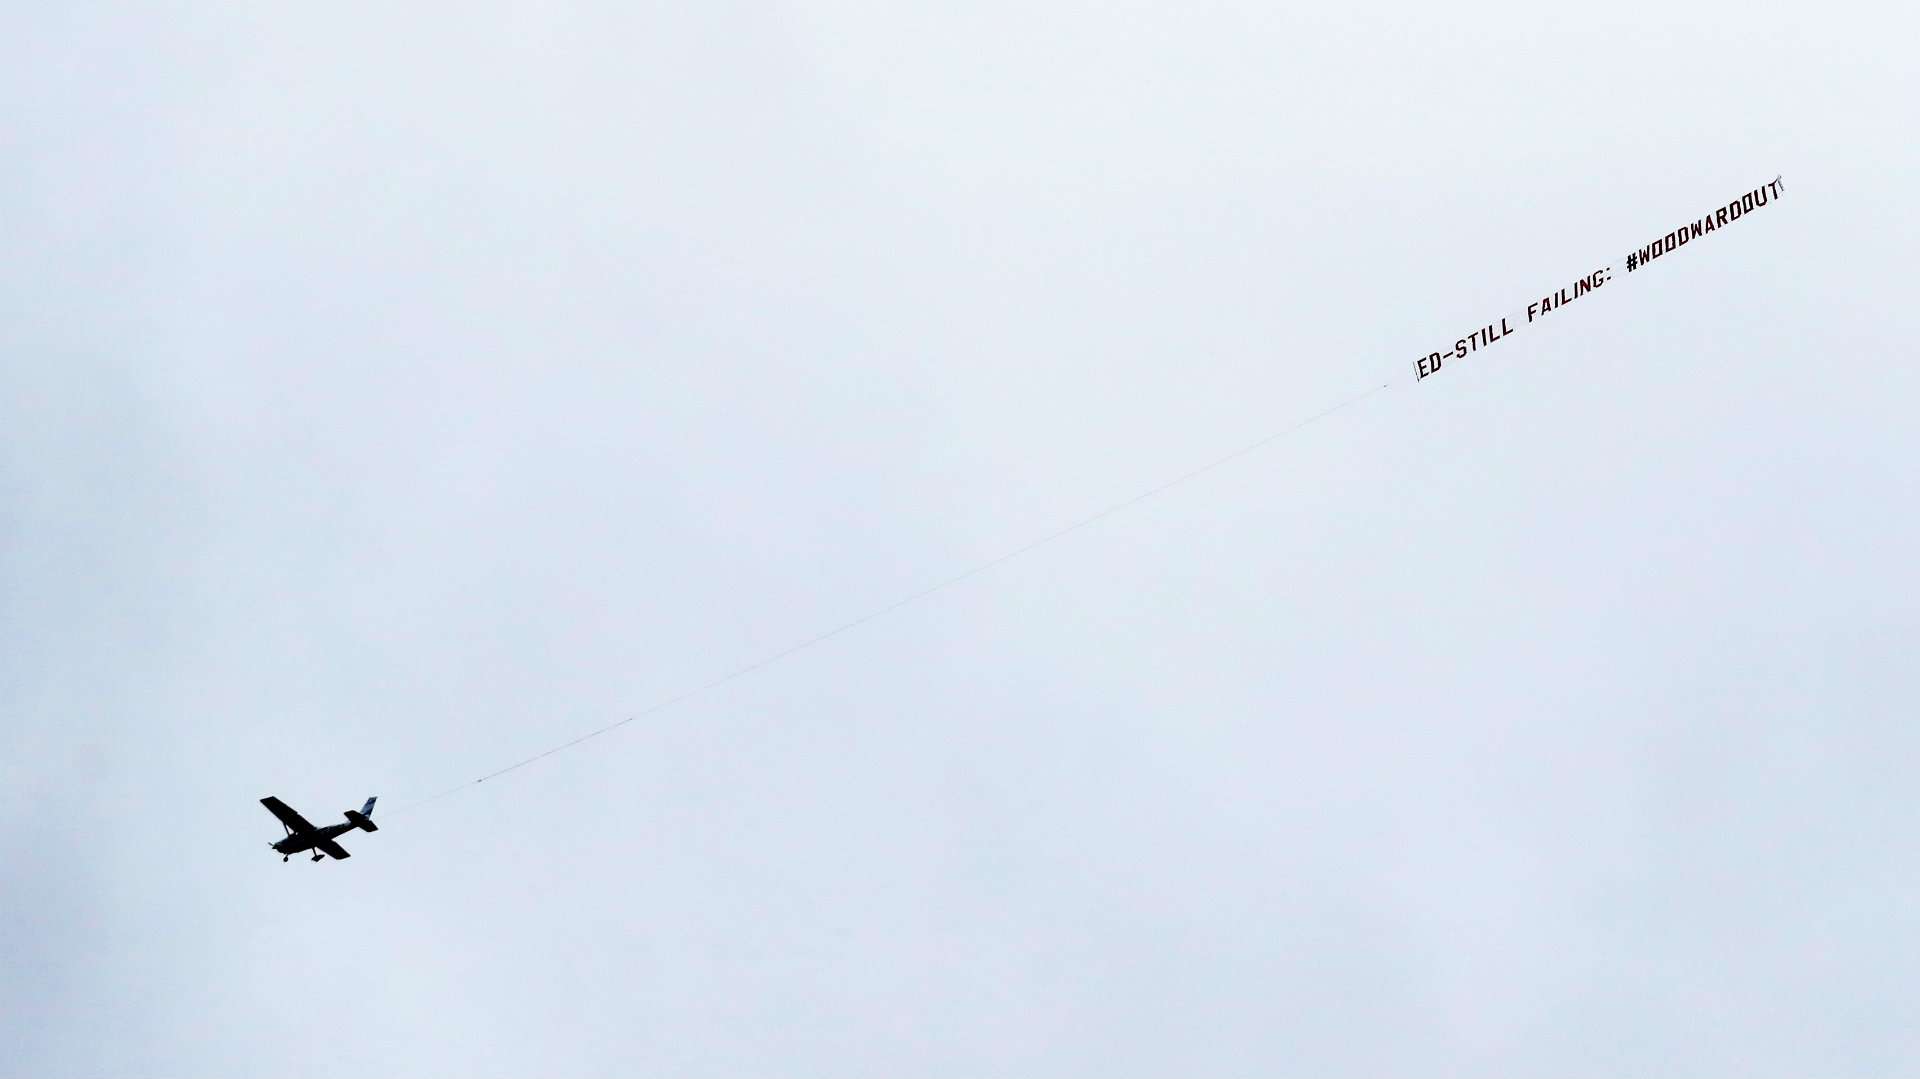 Ed Woodward plane protest Man Utd vs Liverpool 2019-20